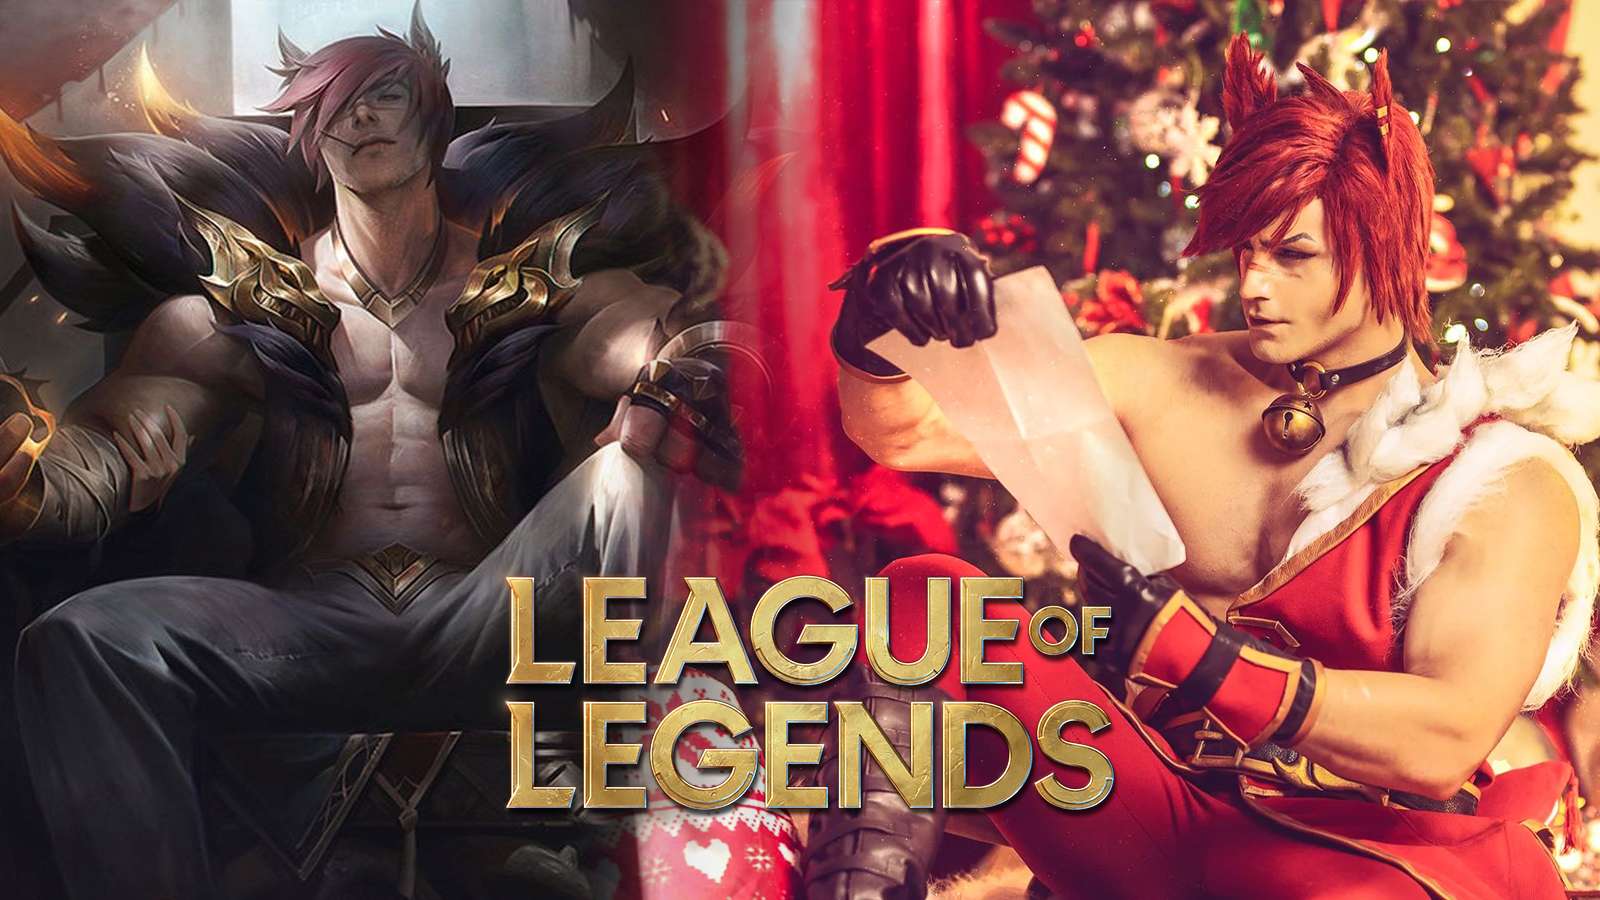 Christmas Sett cosplay in League of Legends by Taryn